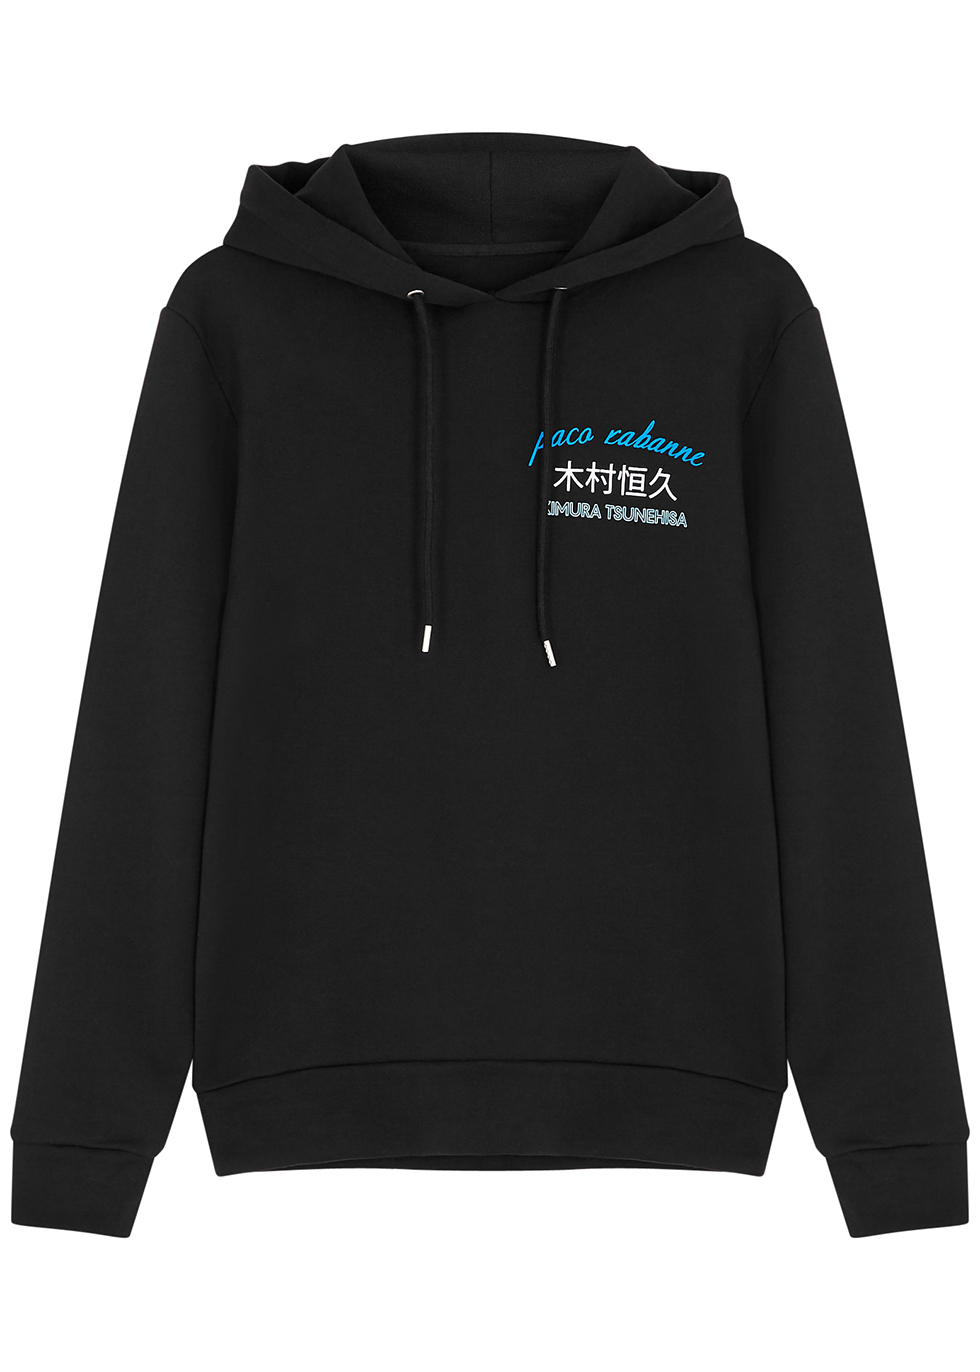 X Kimura Tsunehisa printed hooded cotton sweatshirt